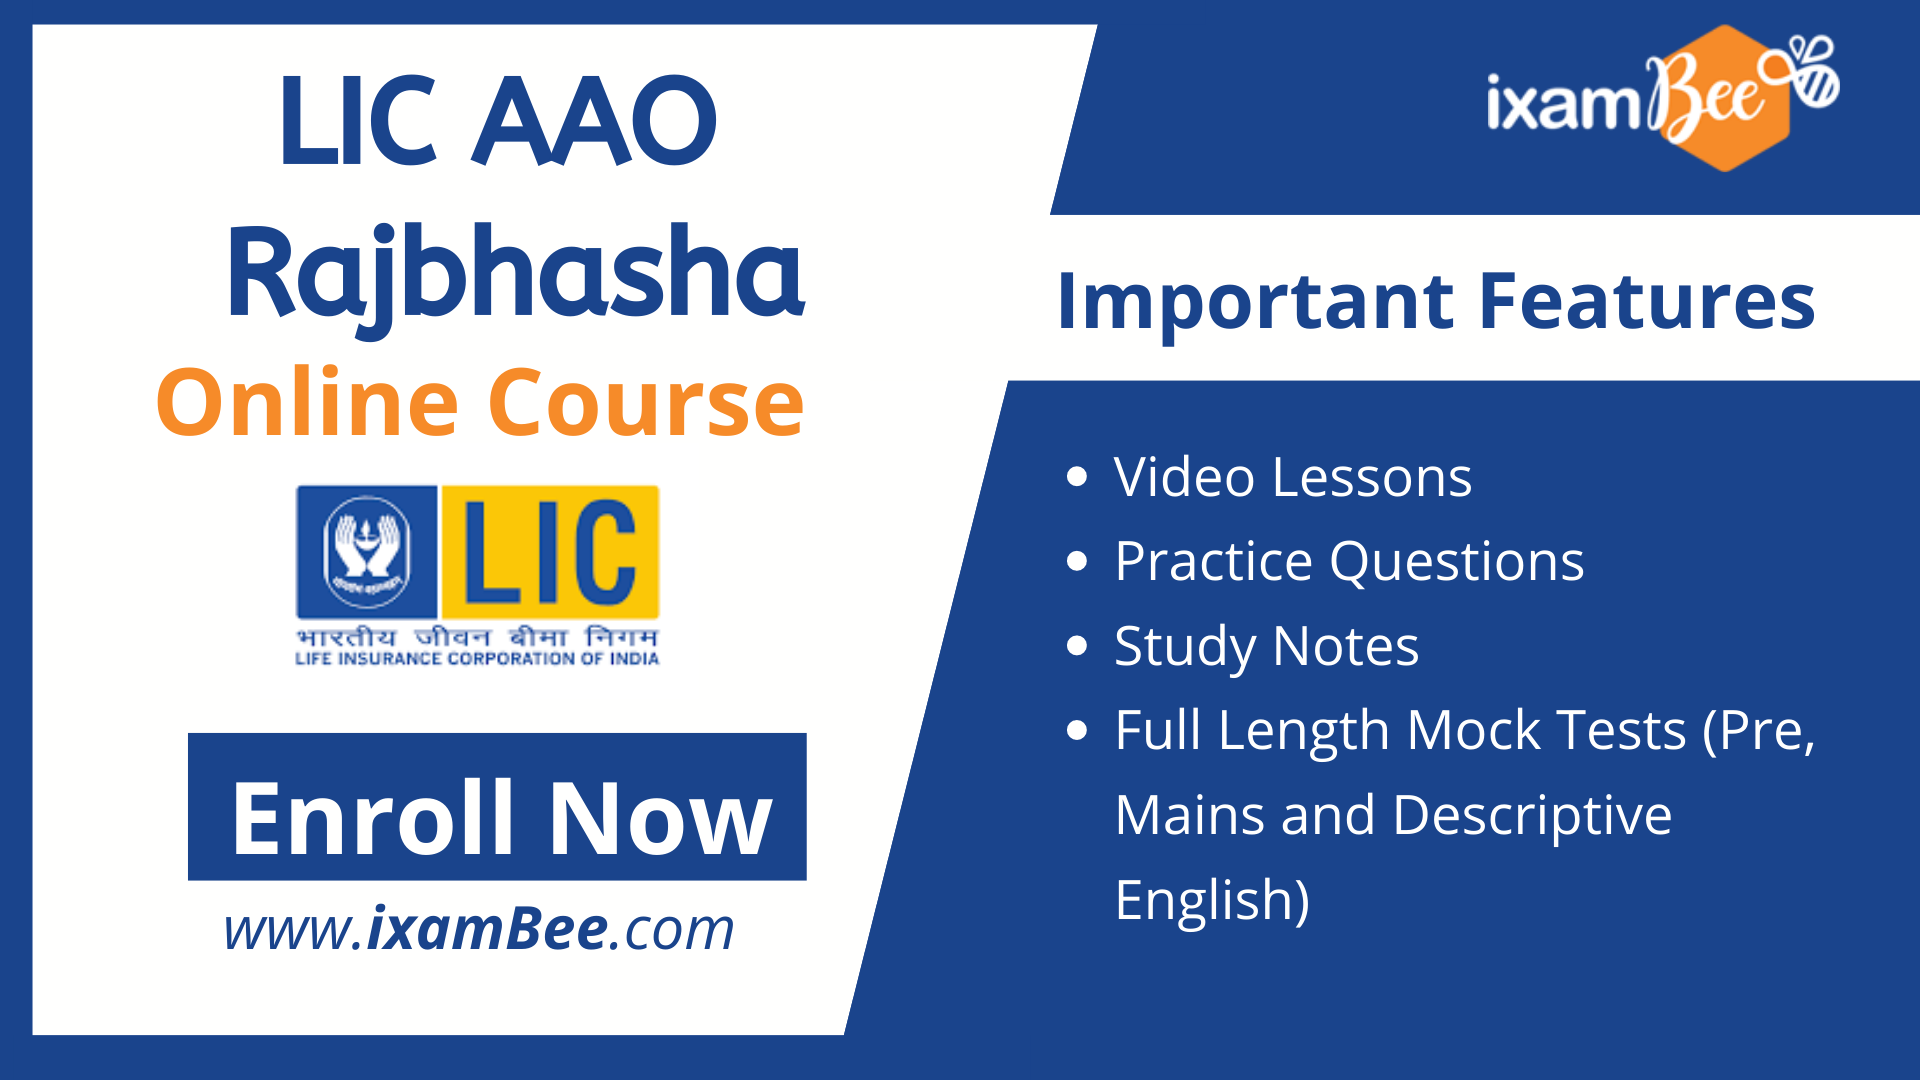 LIC AAO Rajbhasha Online Course